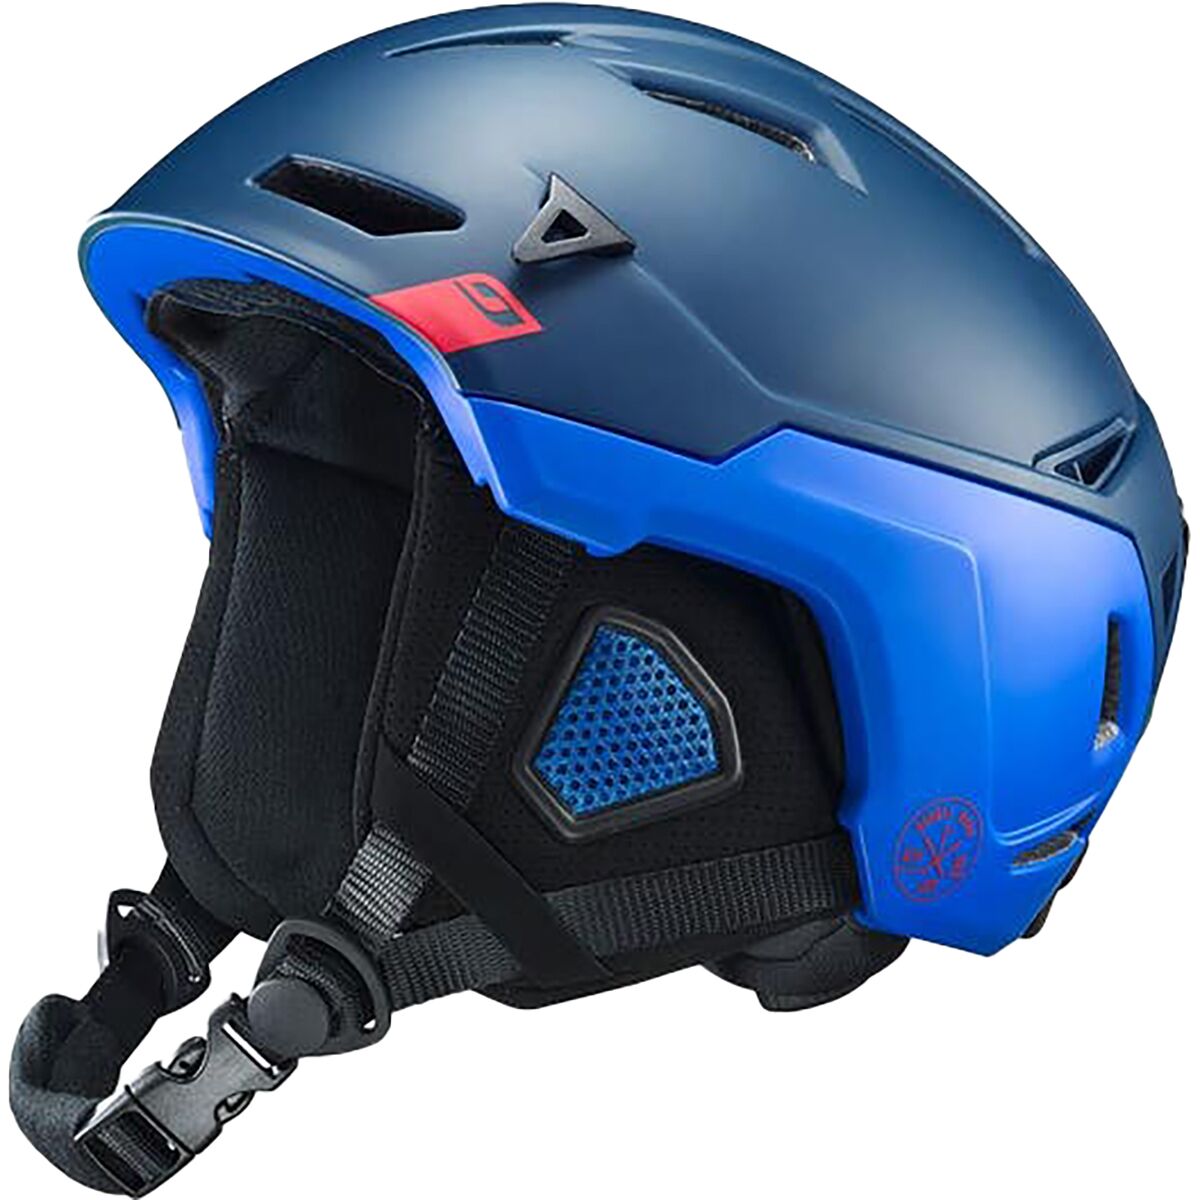 Julbo The Peak LT Helmet Blue/Red